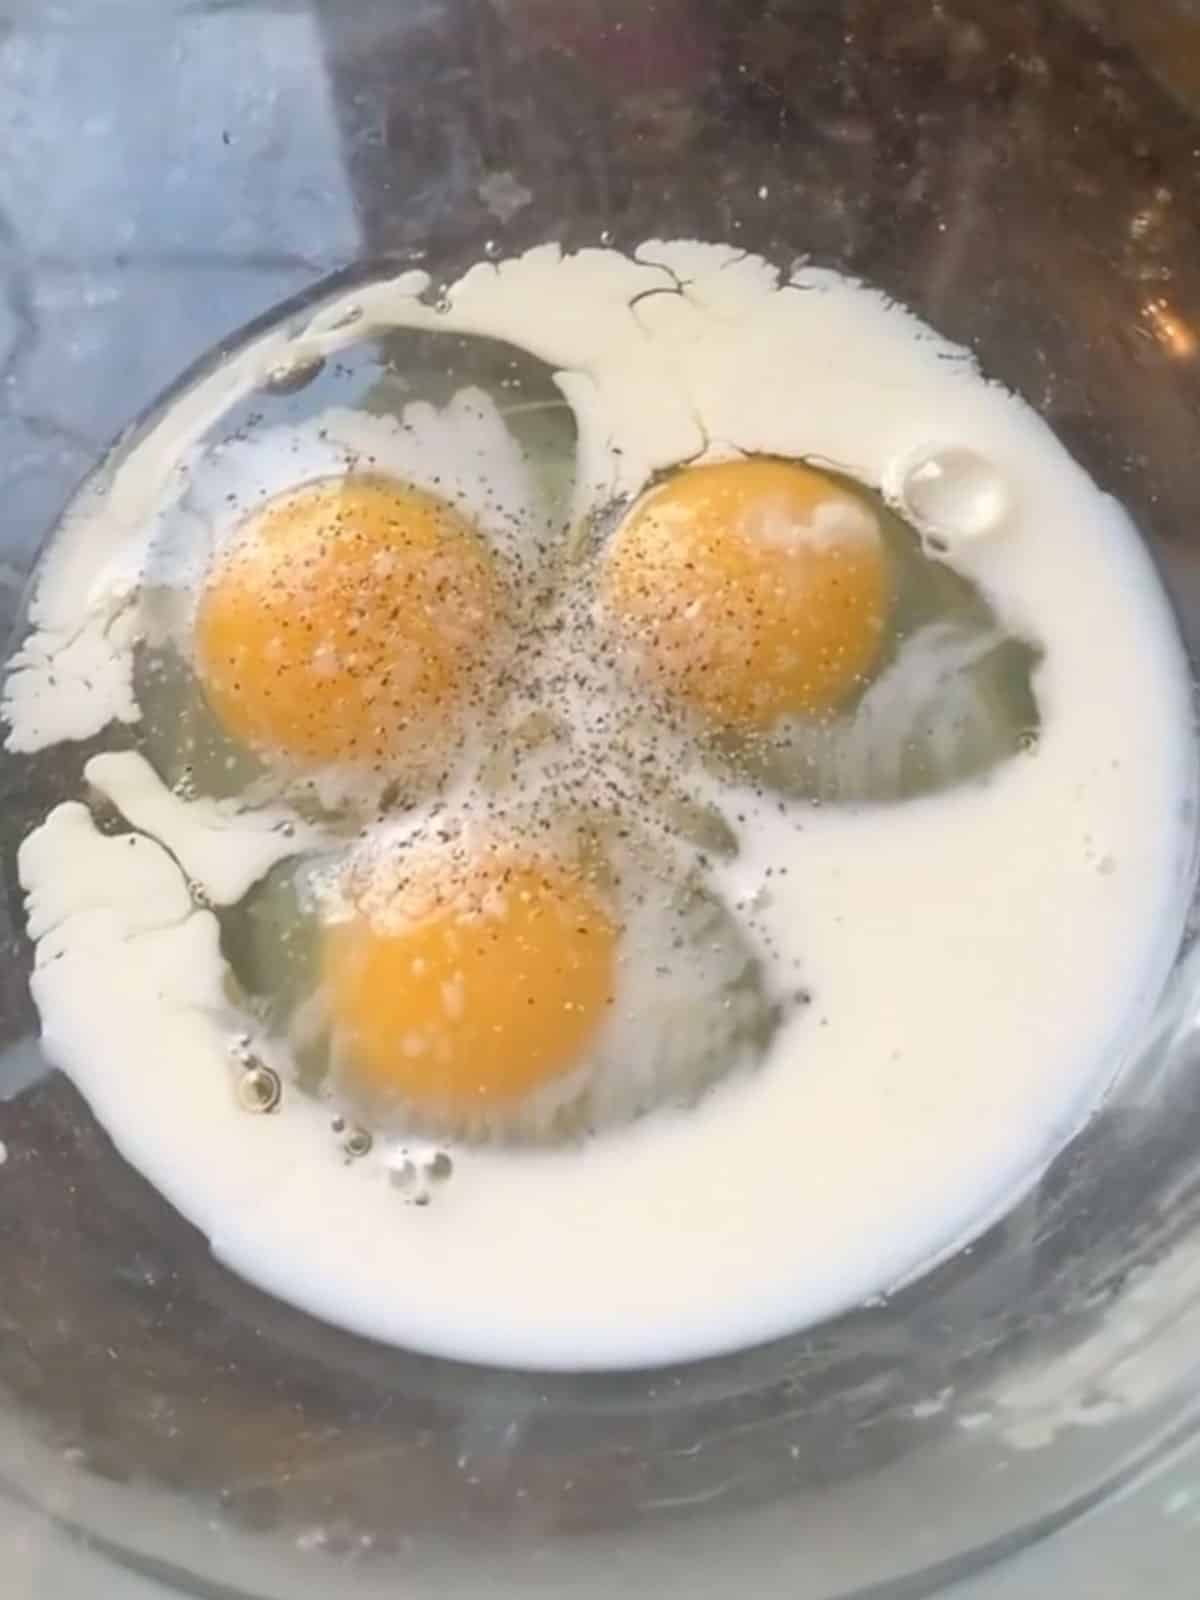 Eggs, milk and seasonings in a glass bowl.